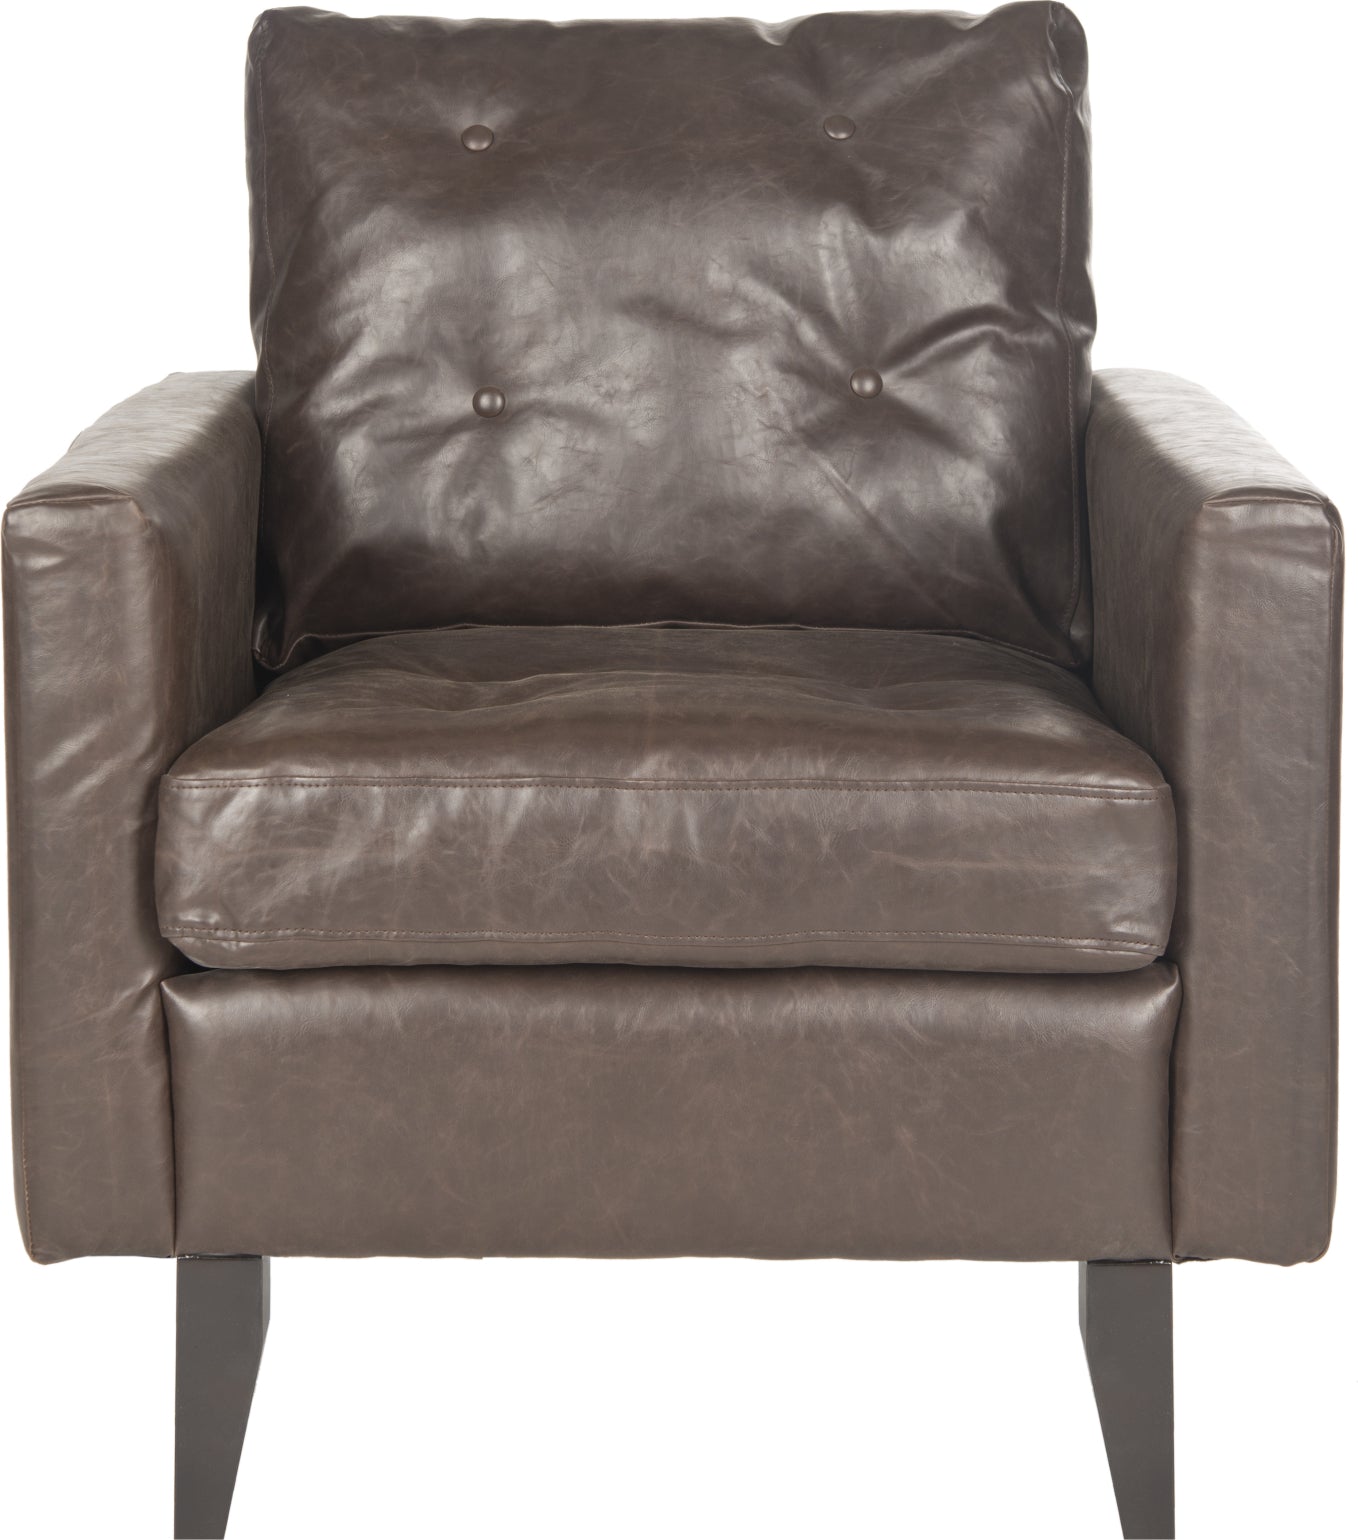 Safavieh Mid Century Modern Caleb Club Chair Antique Brown and Espresso Furniture main image